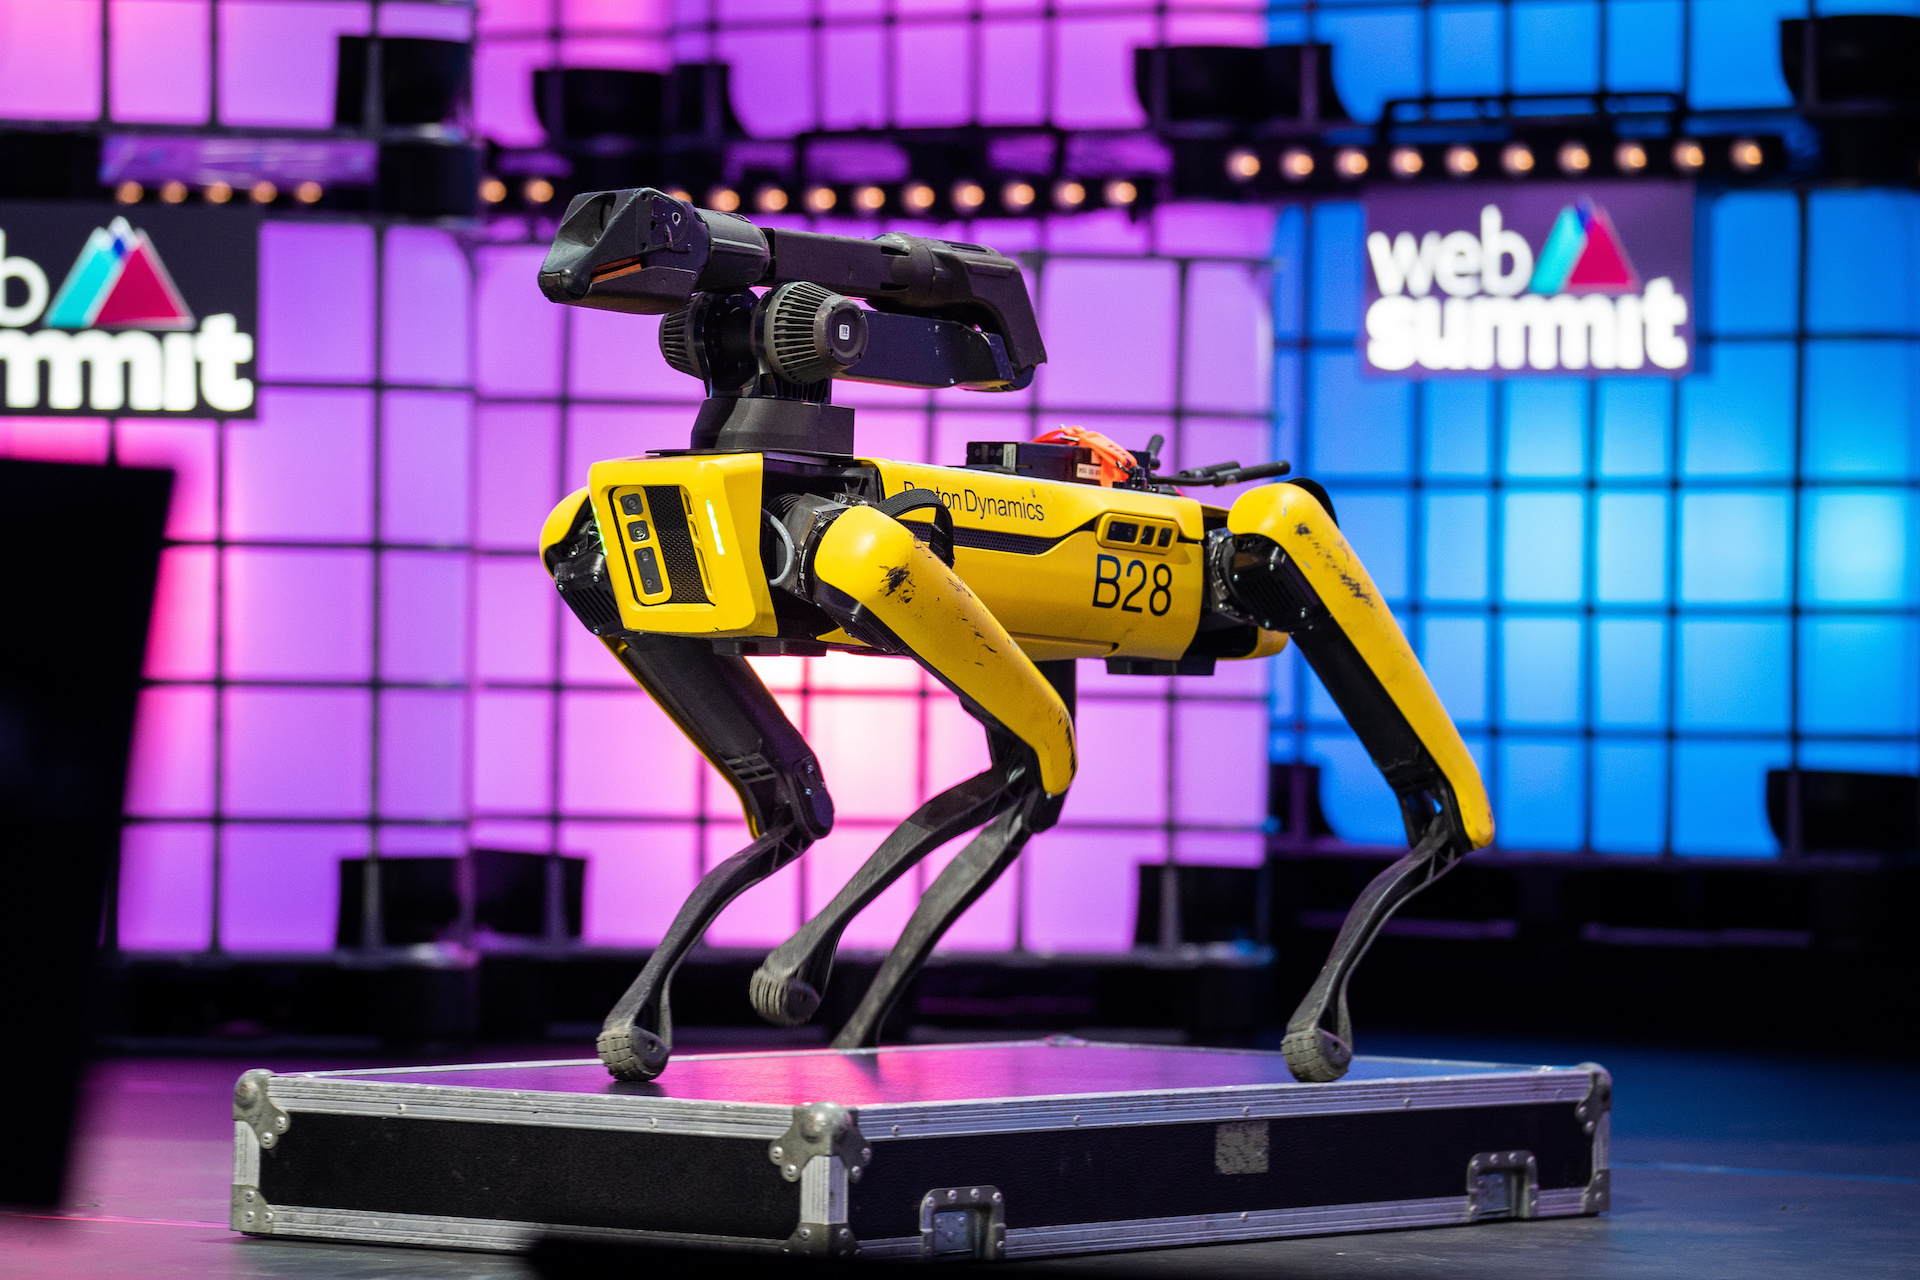 An image of a Boston Dynamics robot at a tech show.